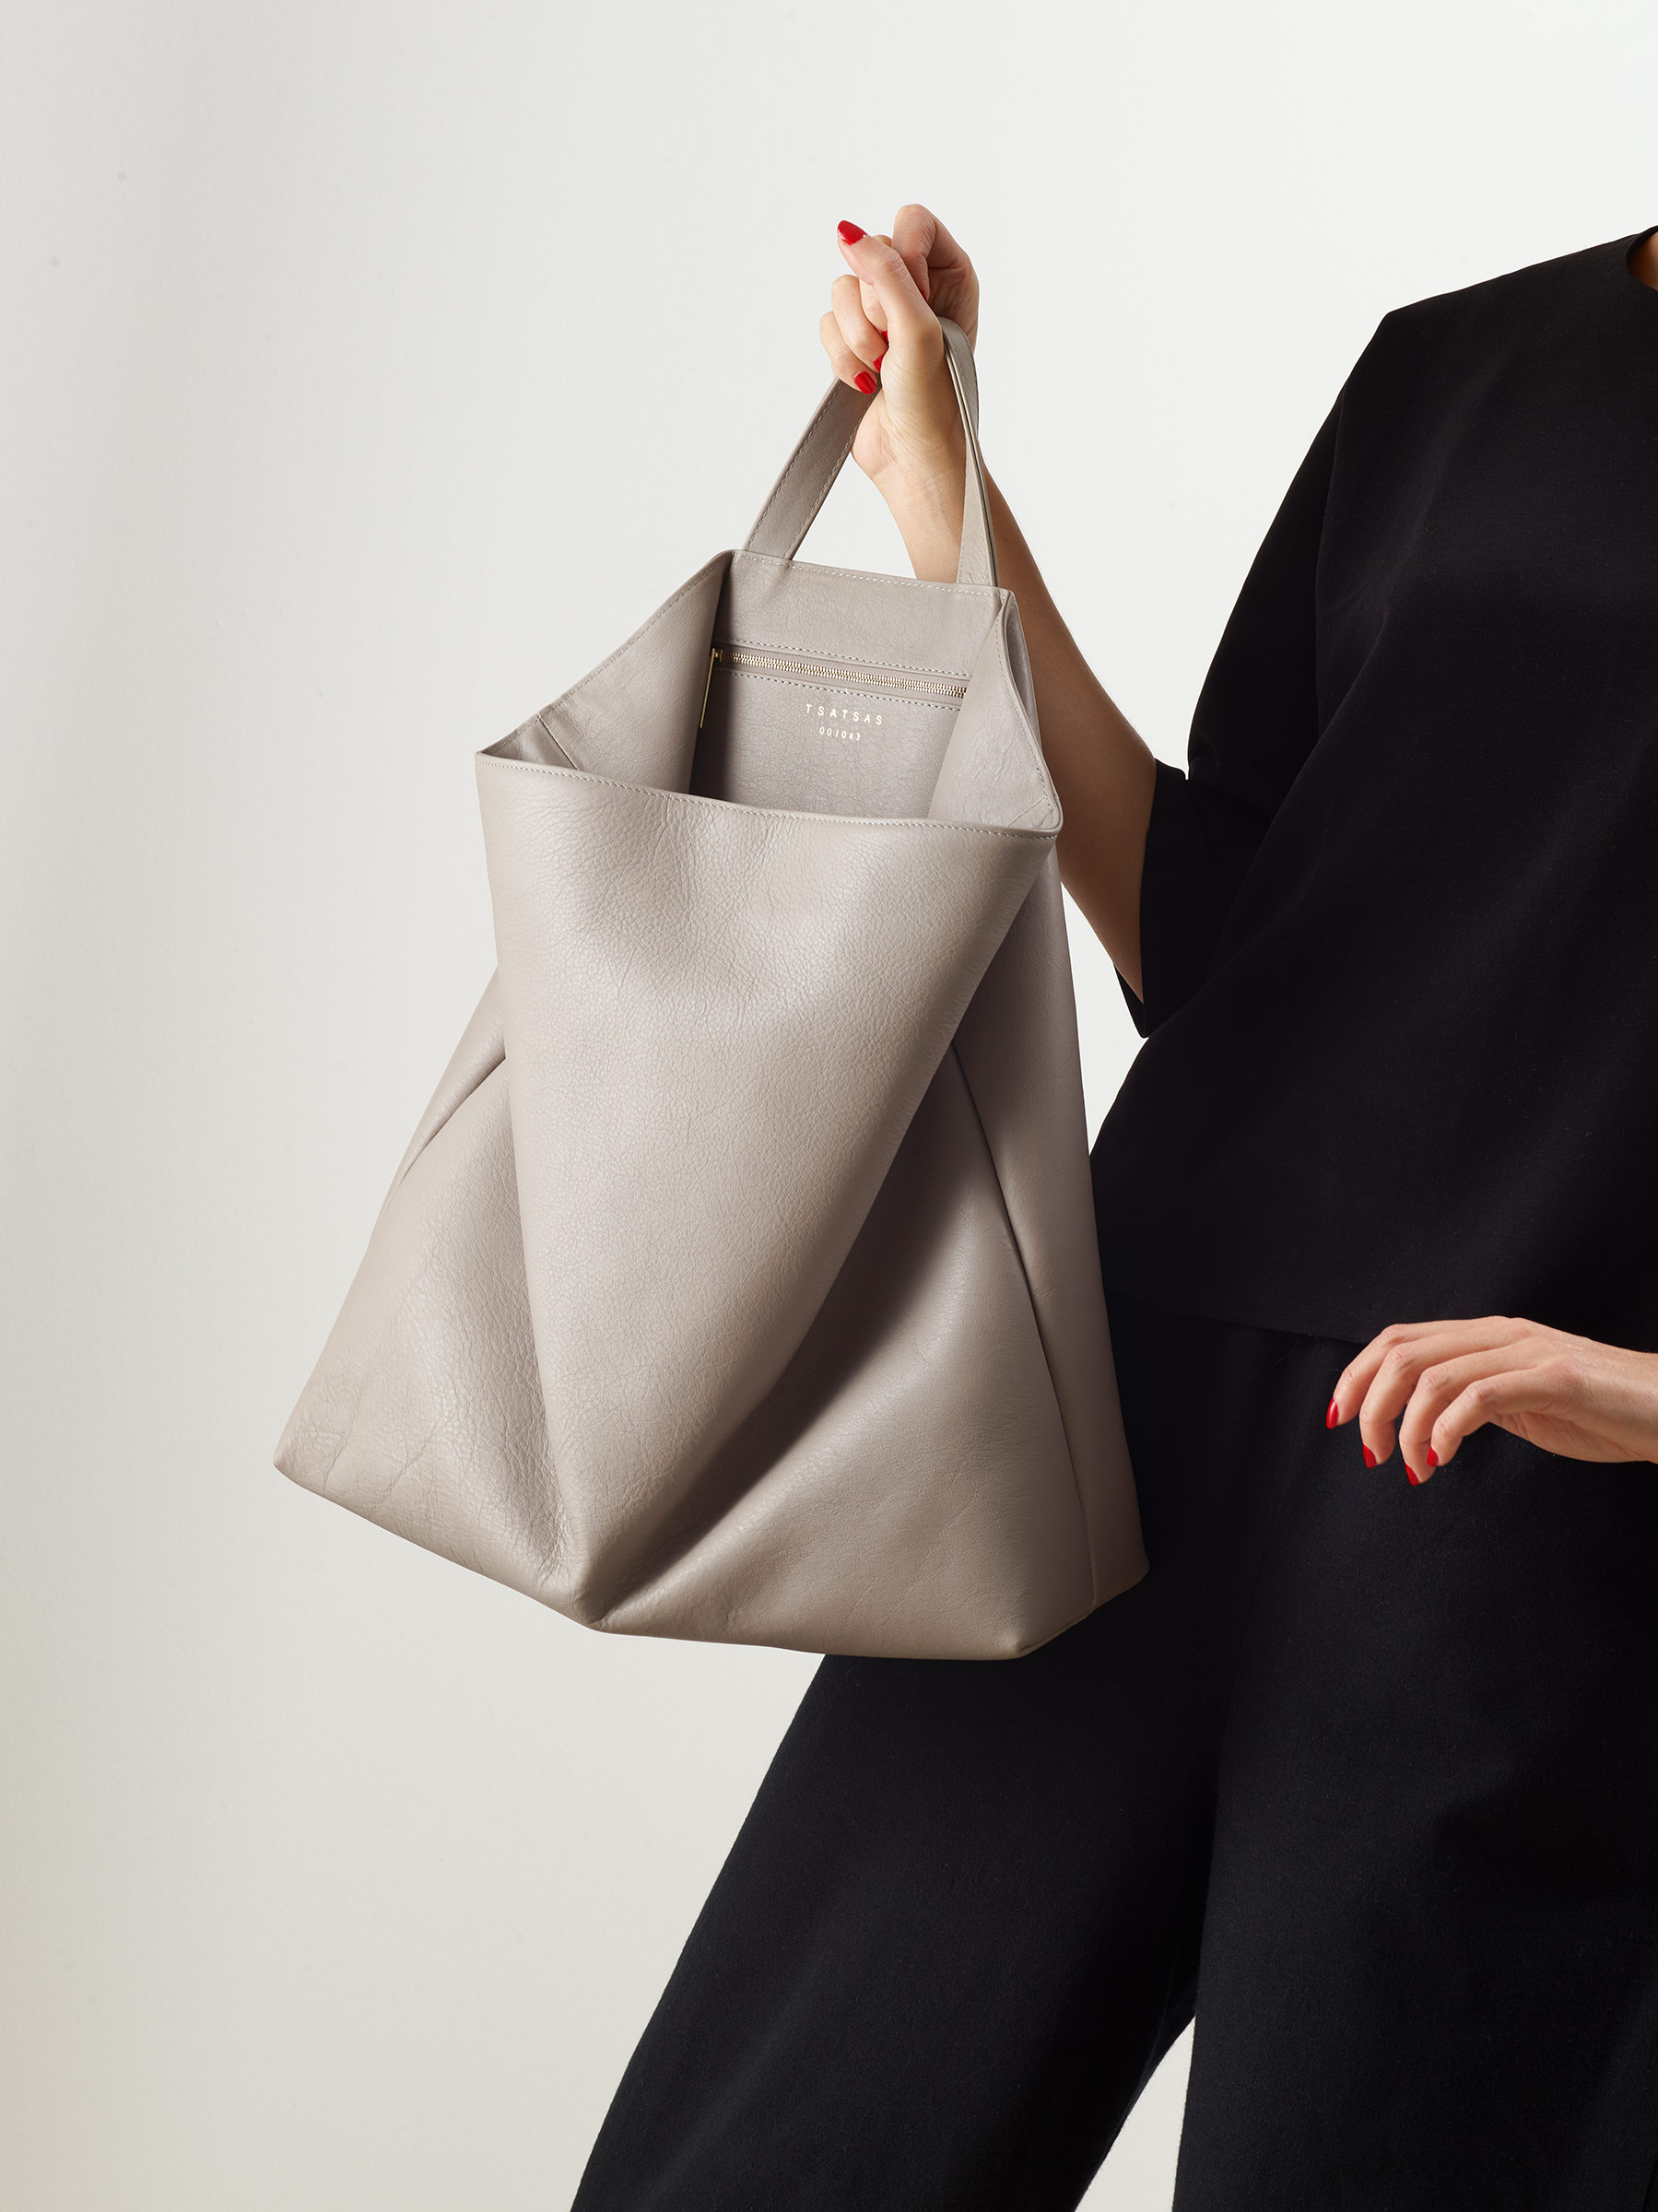 FLUKE tote bag in grey calfskin leather | TSATSAS